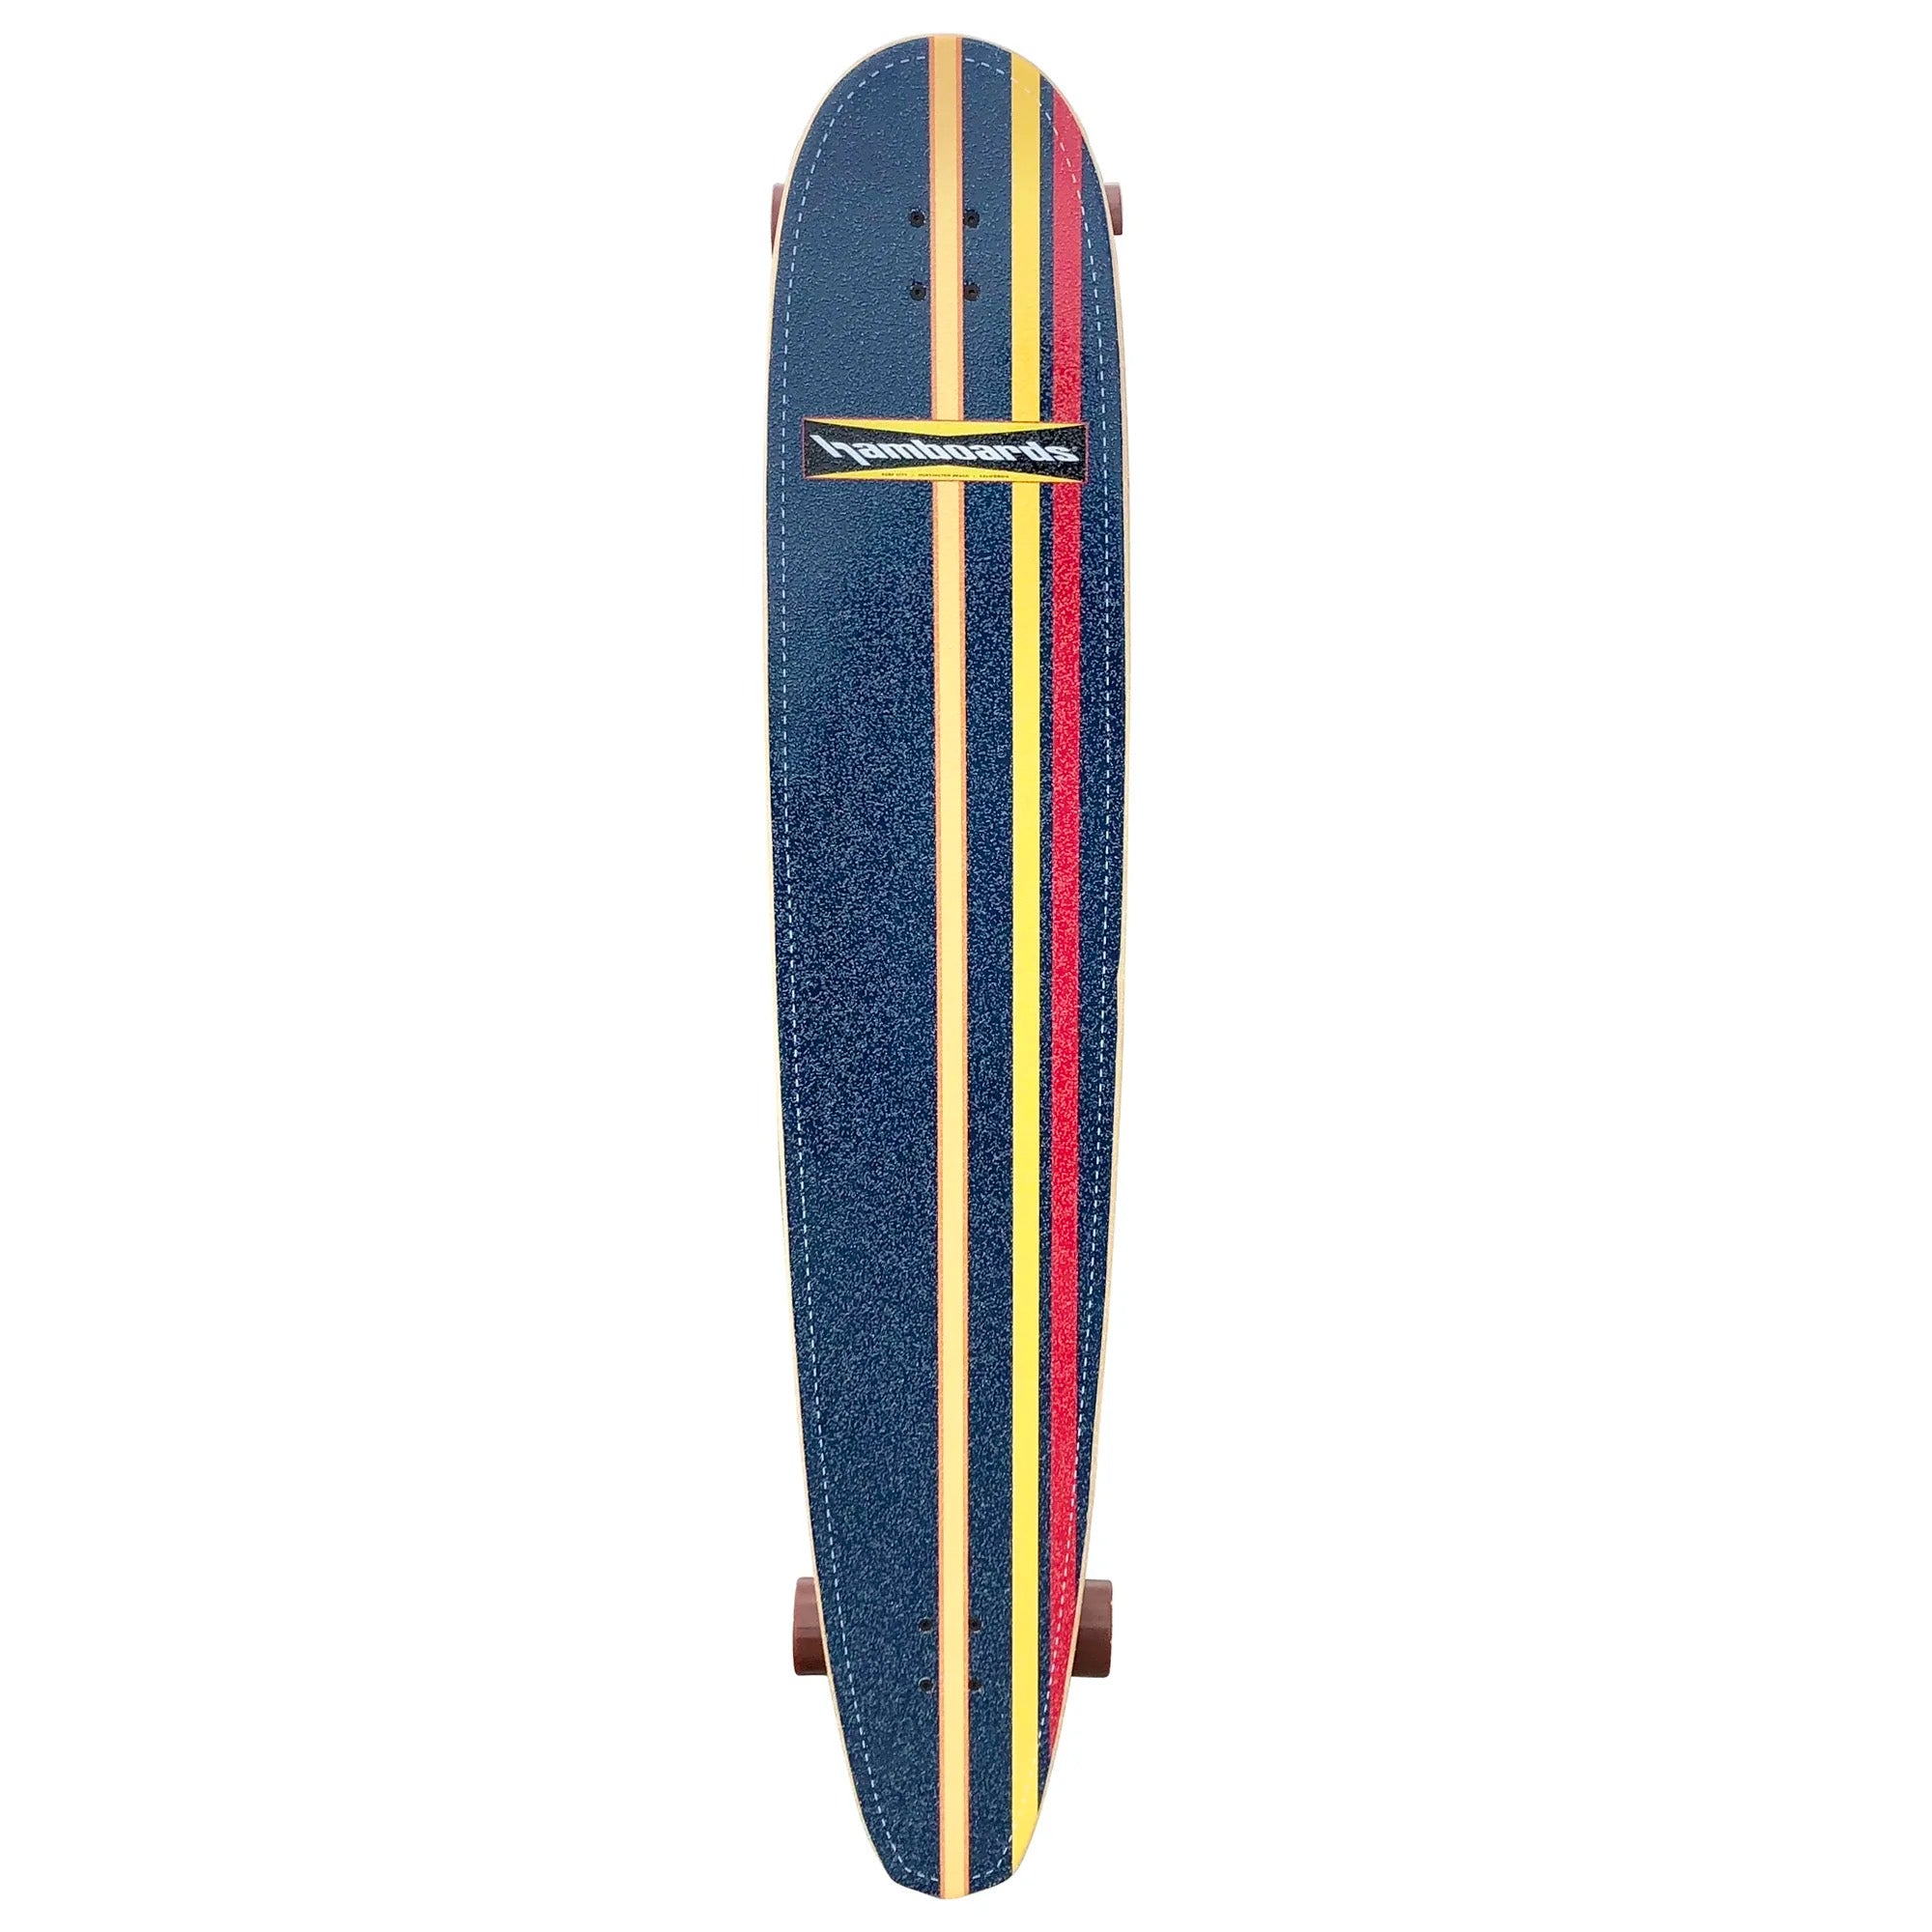 Hamboard Logger 60" Surfskate Skateboard